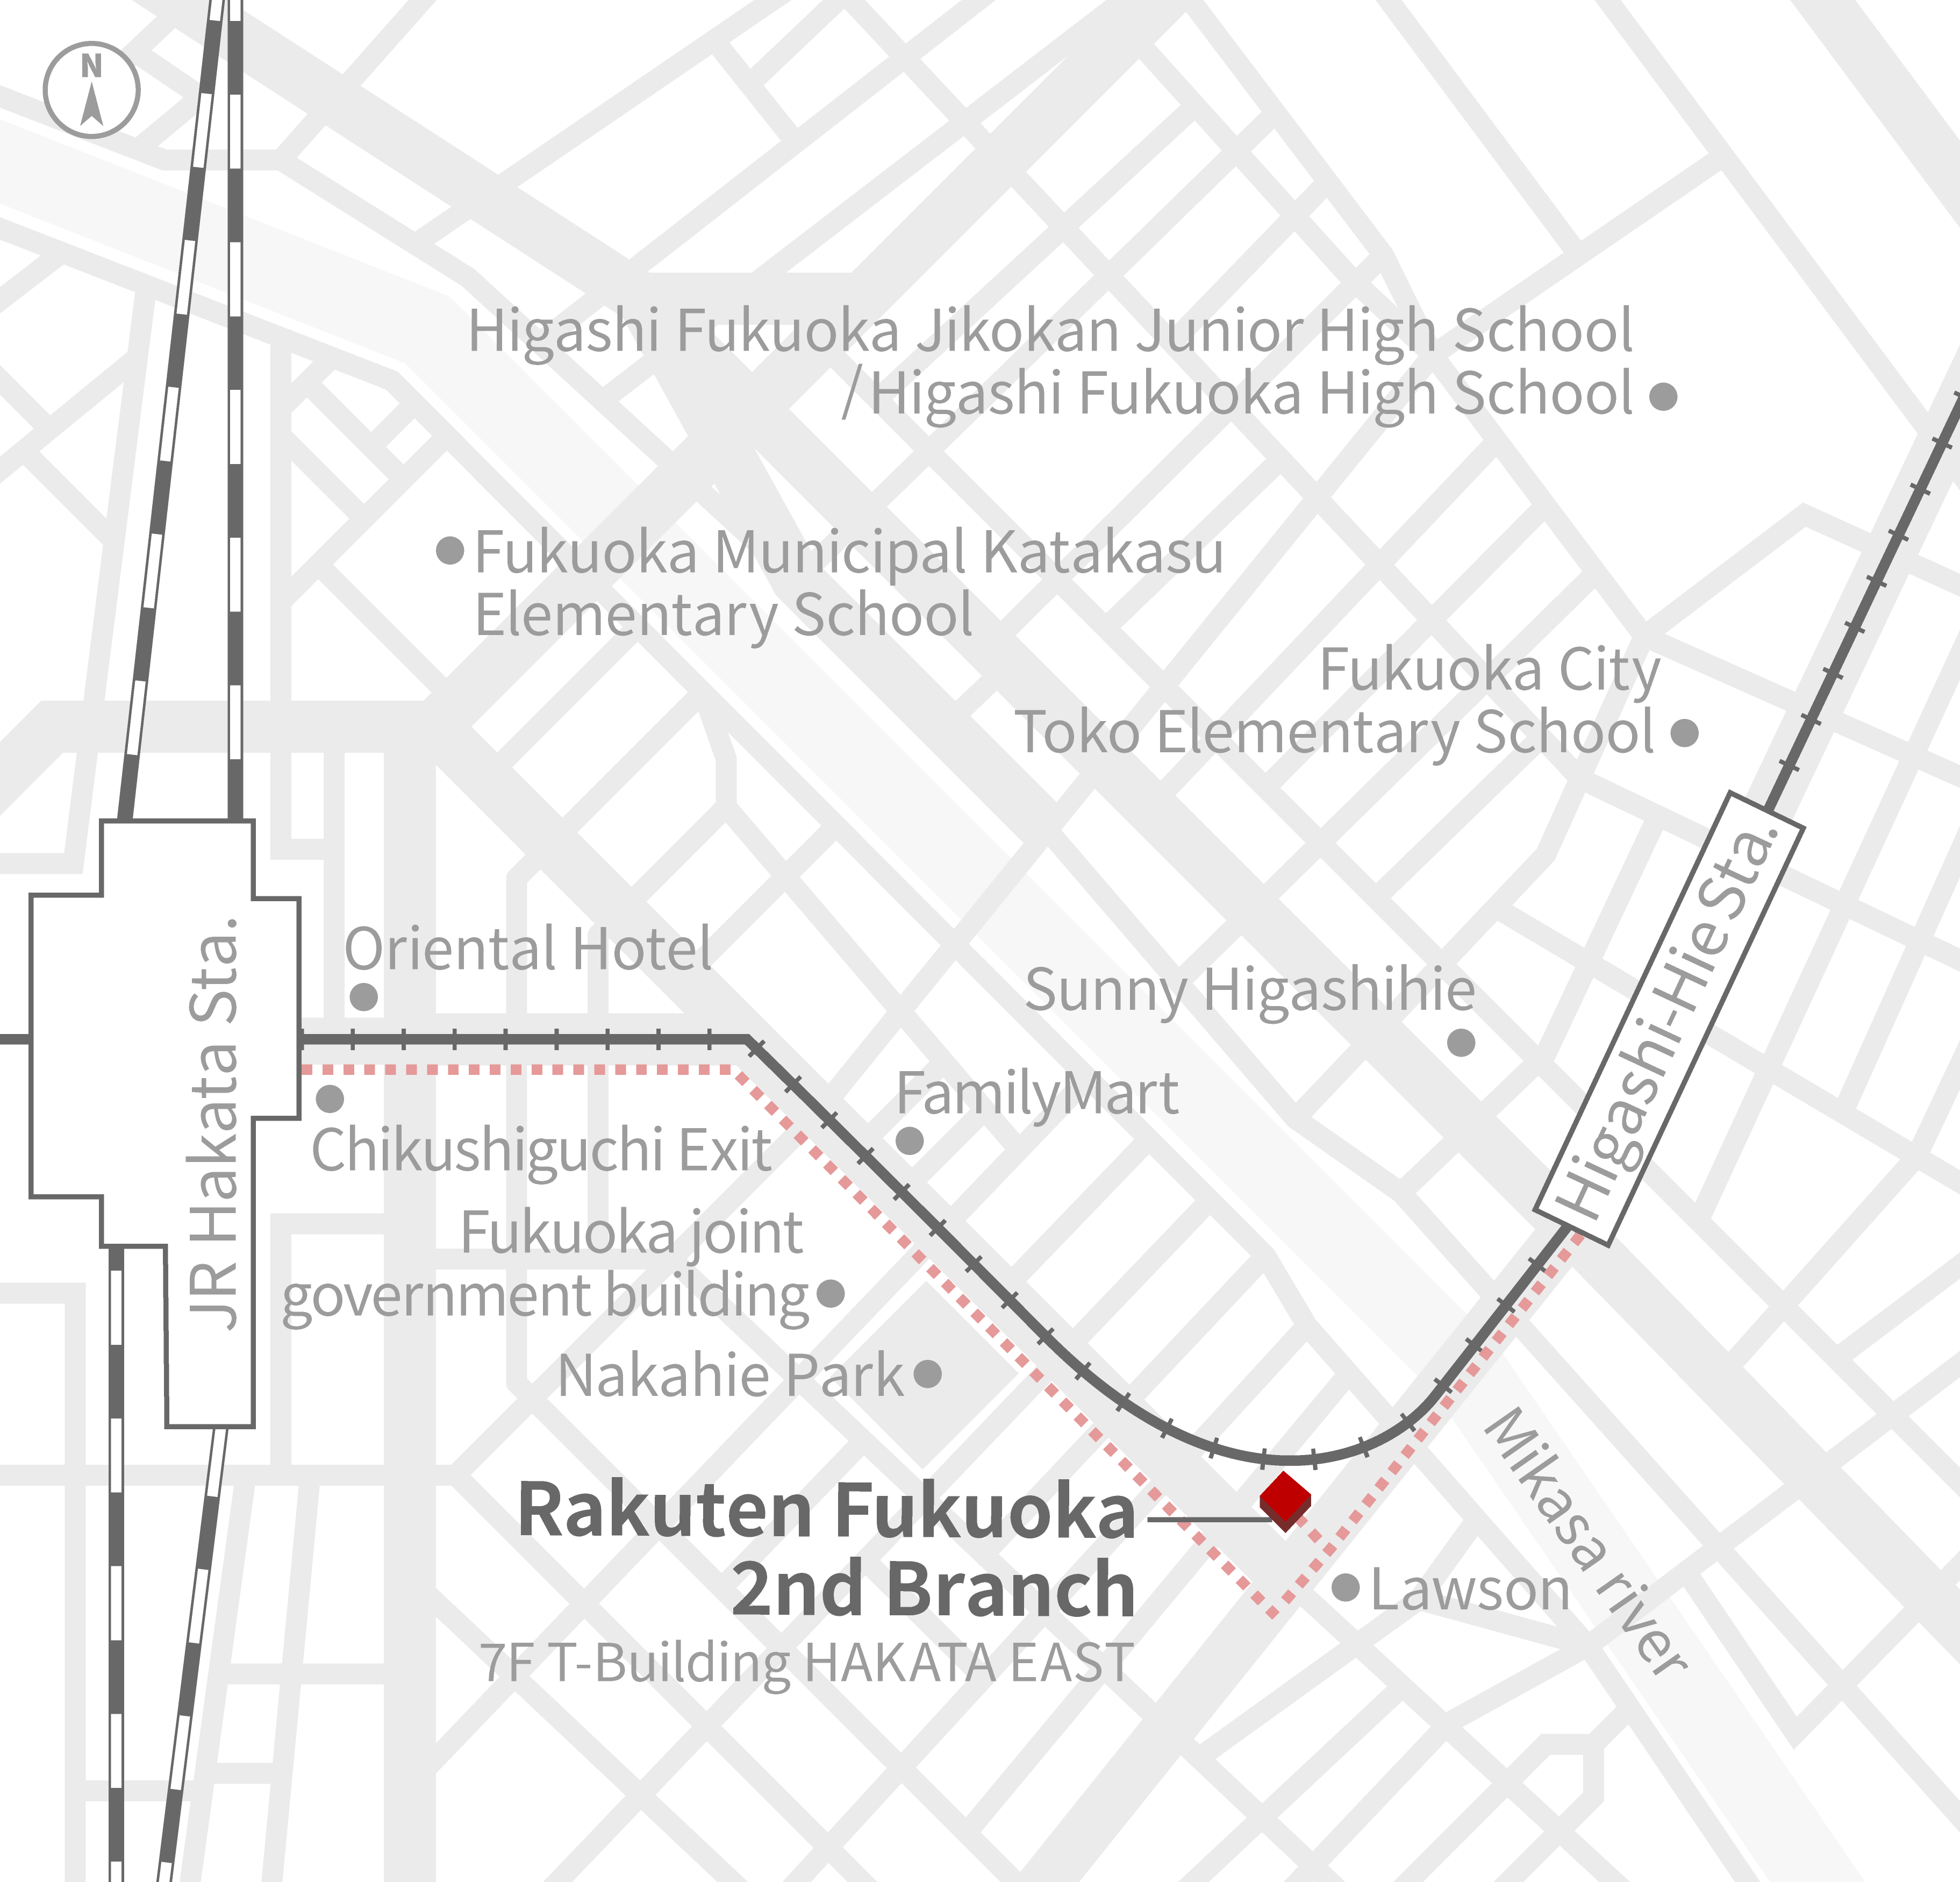 Access Map of Rakuten, Inc. Fukuoka 2nd Branch office.